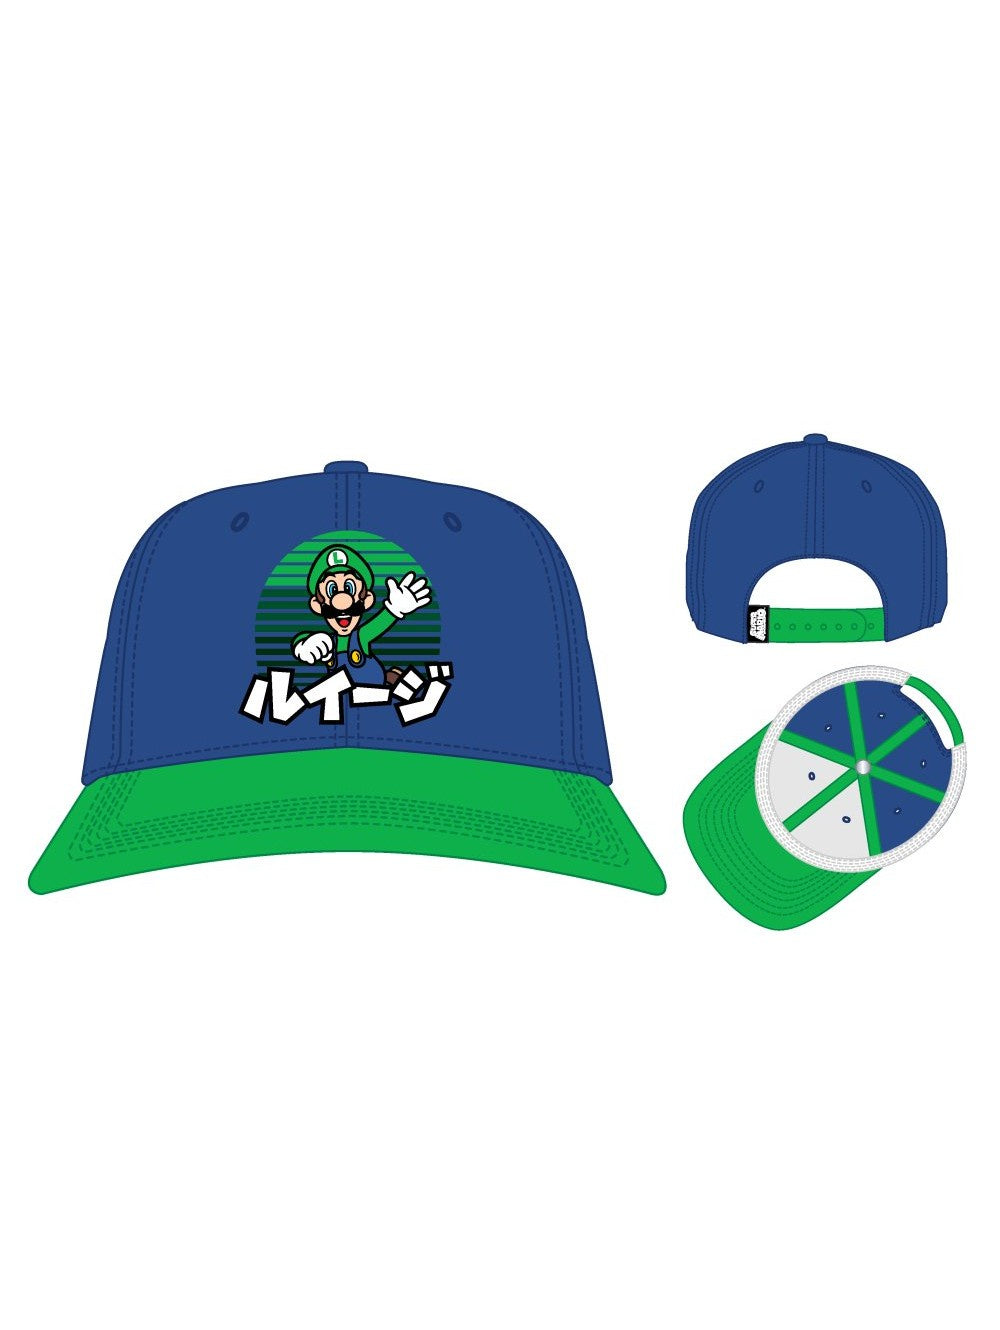 Nintendo - Luigi - Kanji Precurve Snapback